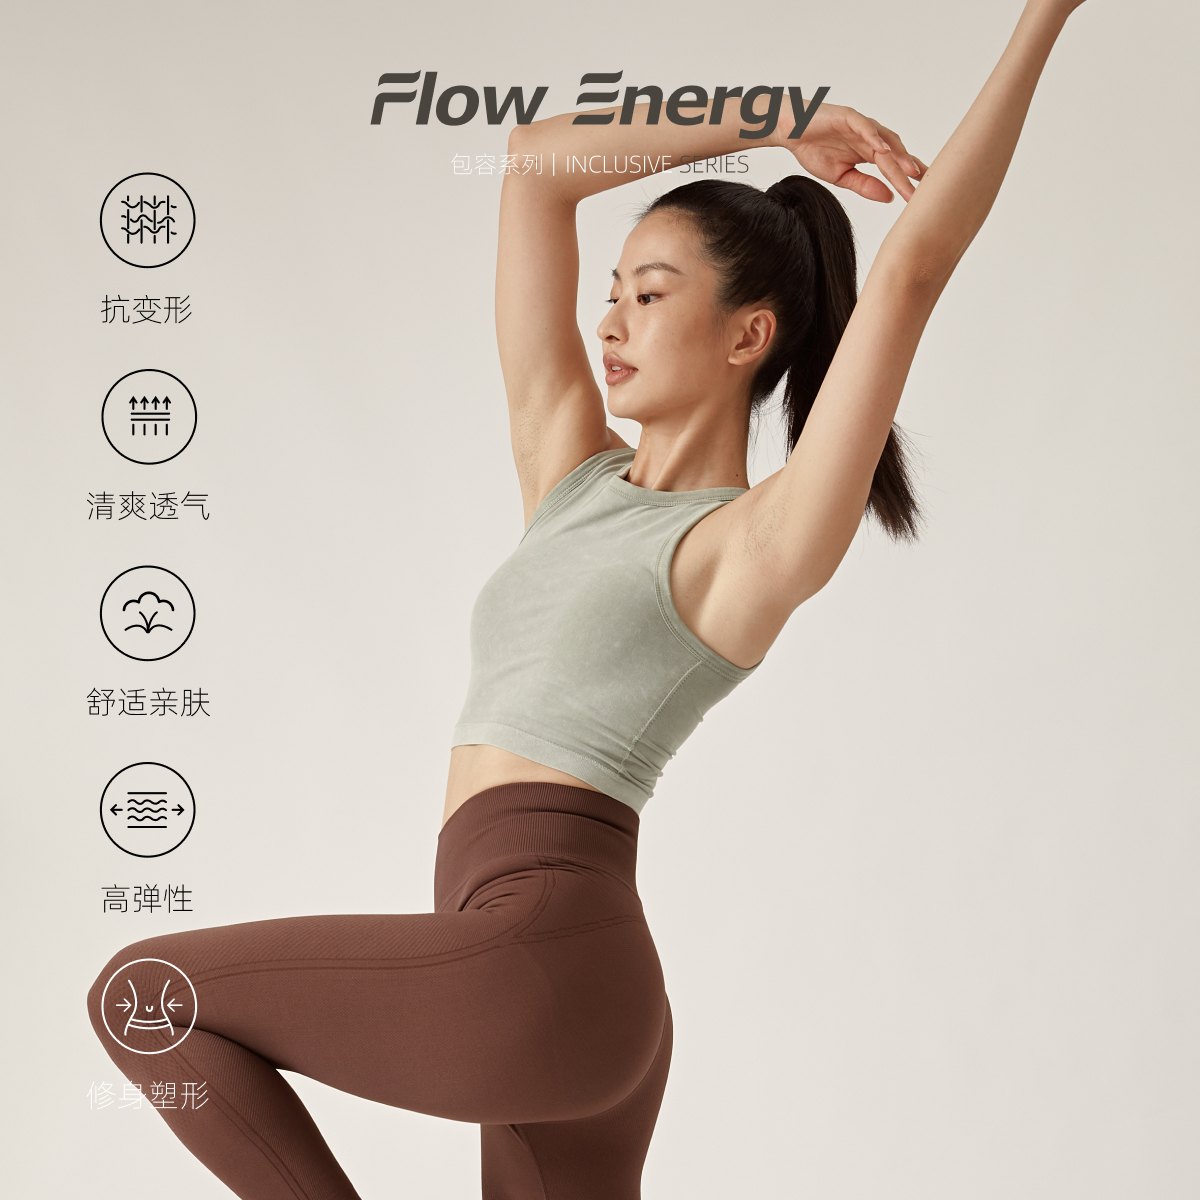 Flow energy 运动背心瑜伽健身训练水洗磨毛柔软贴身显瘦上衣无缝